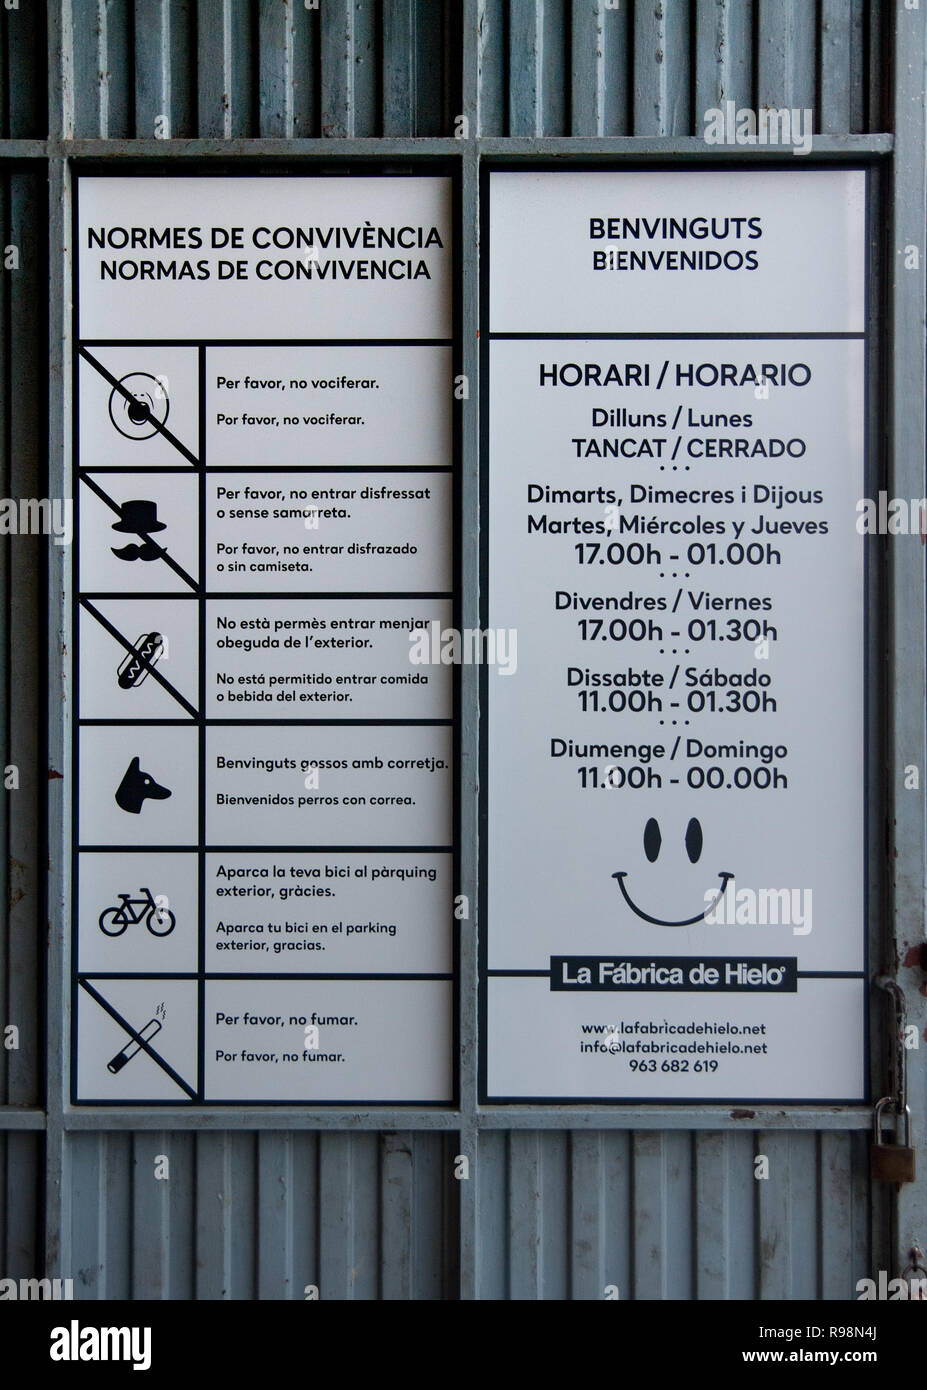 Entrance welcome sign of La Fabrica de Hielo, club in Valencia Stock Photo